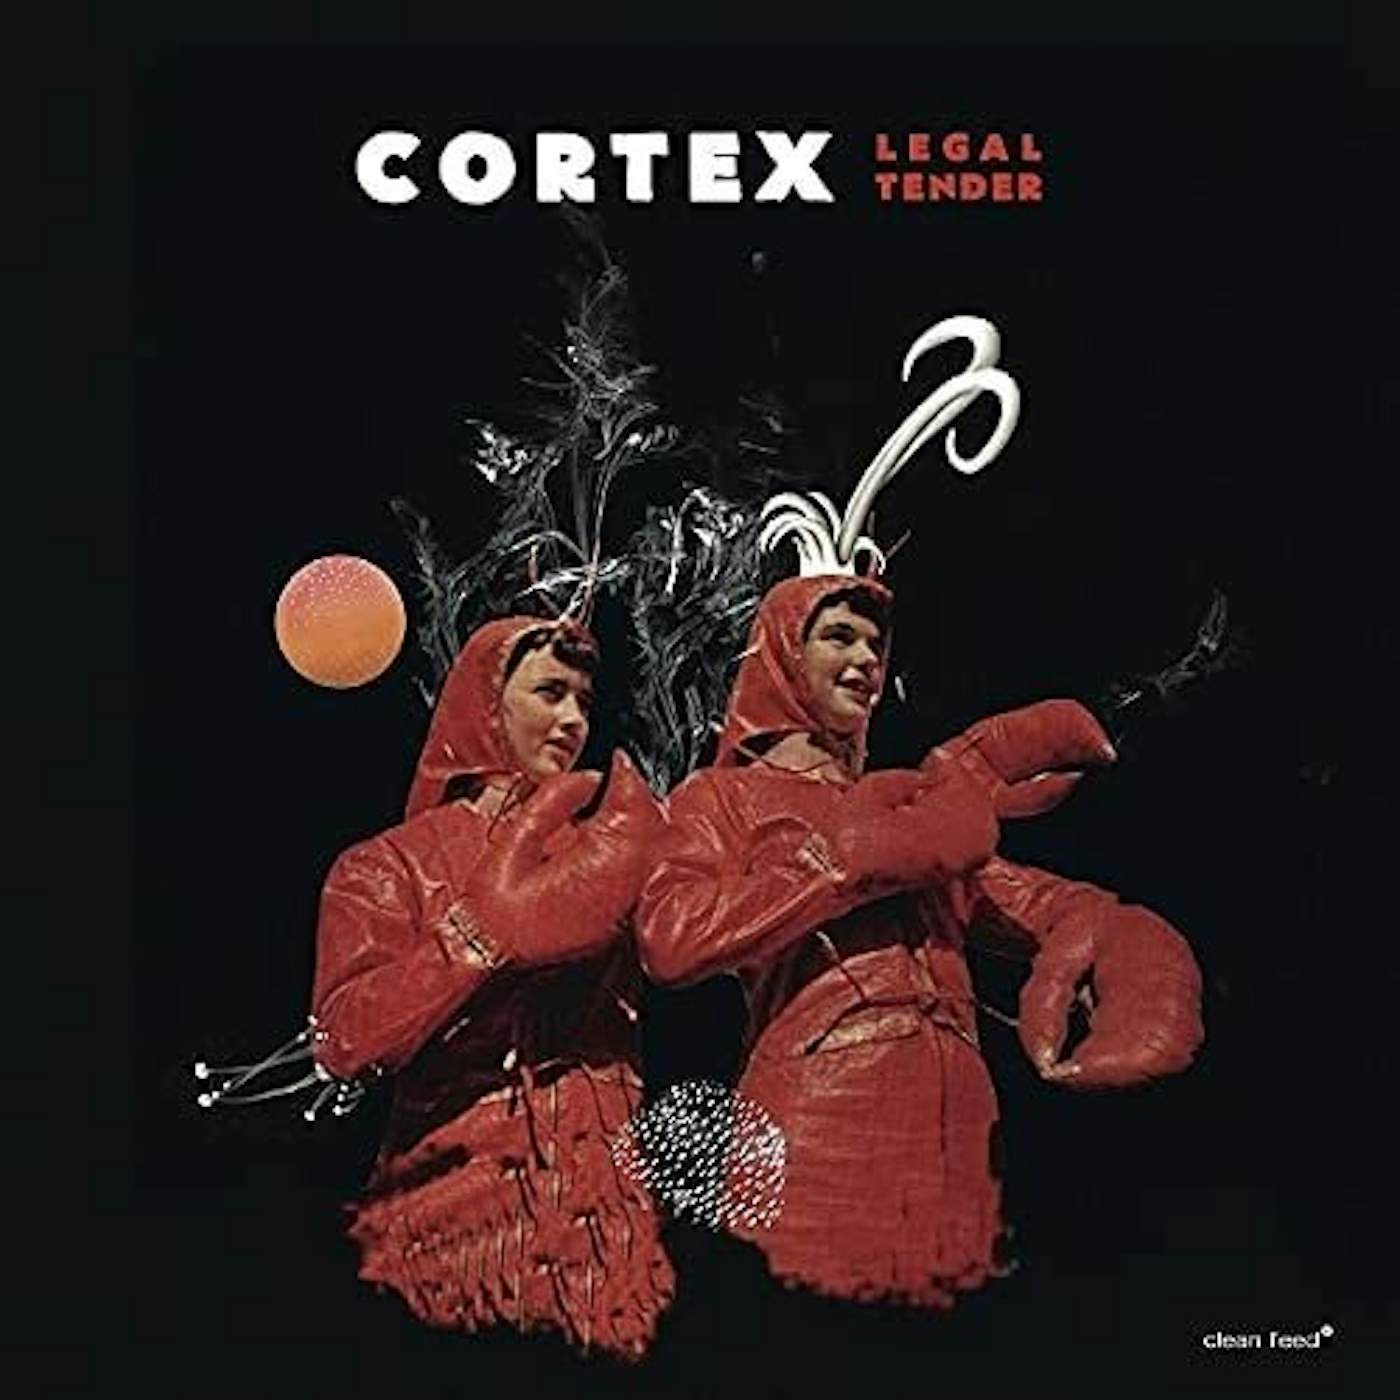 Cortex Legal Tender Vinyl Record